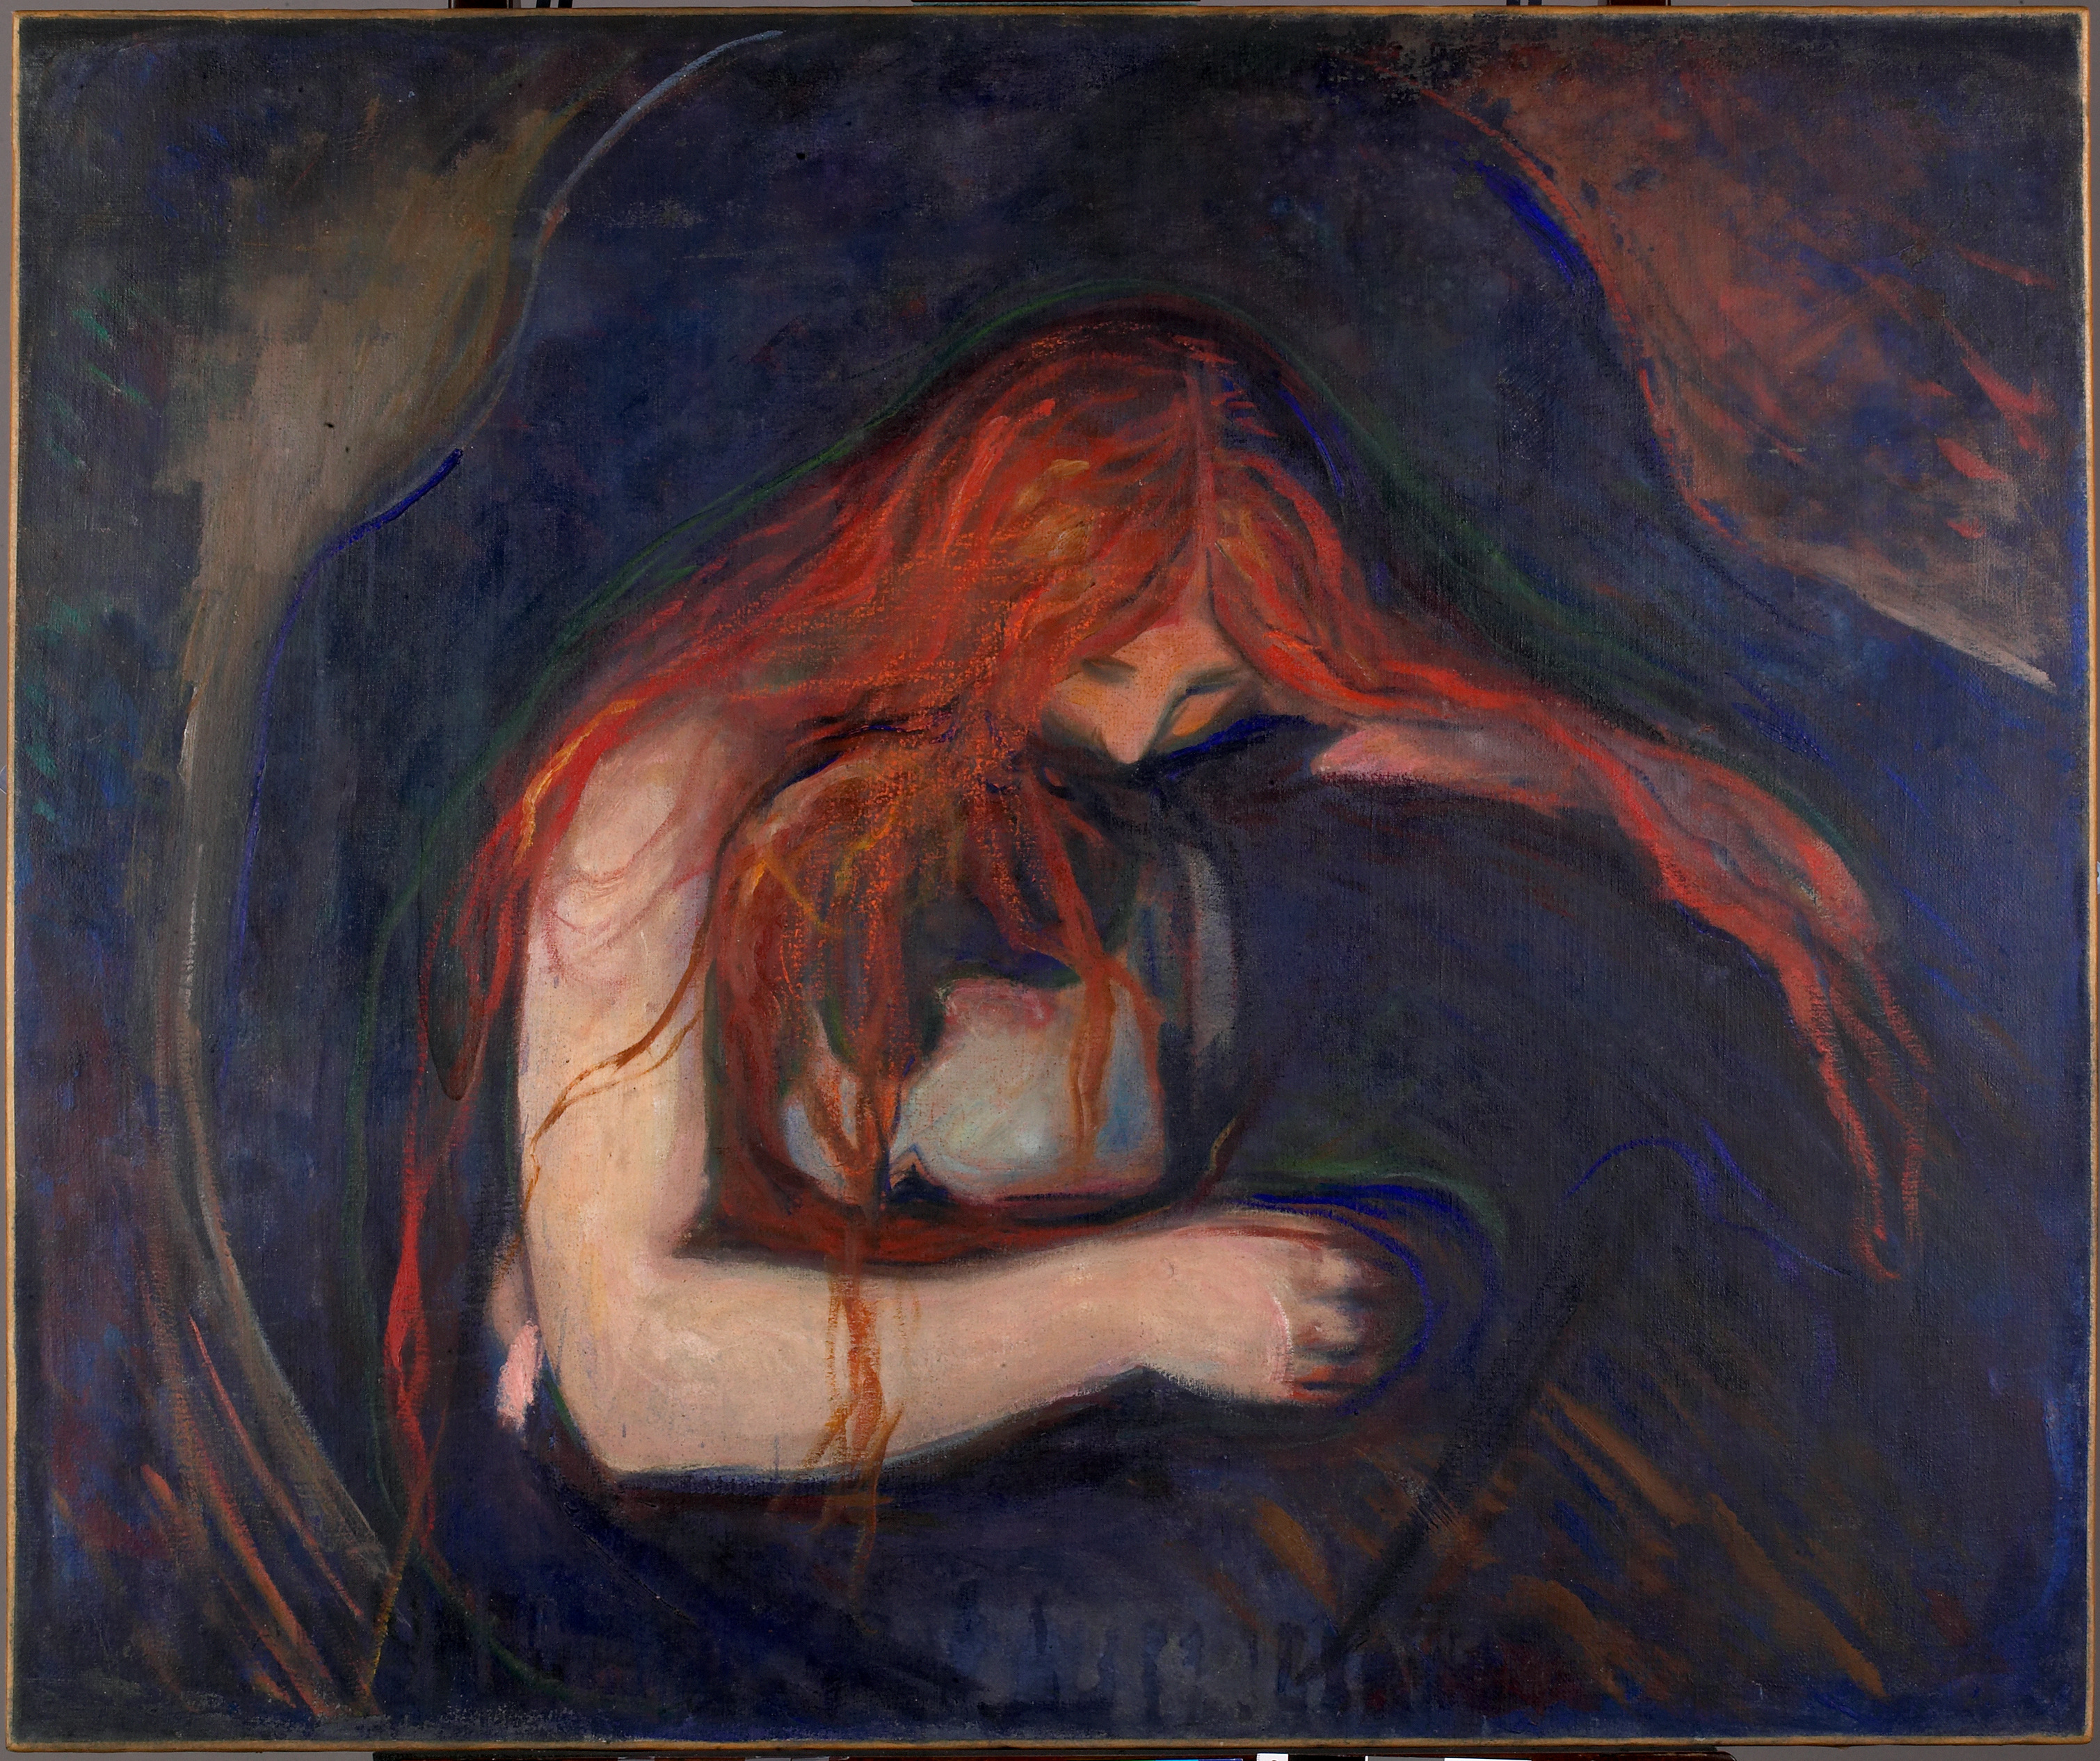 Upír by Edvard Munch - 1895 